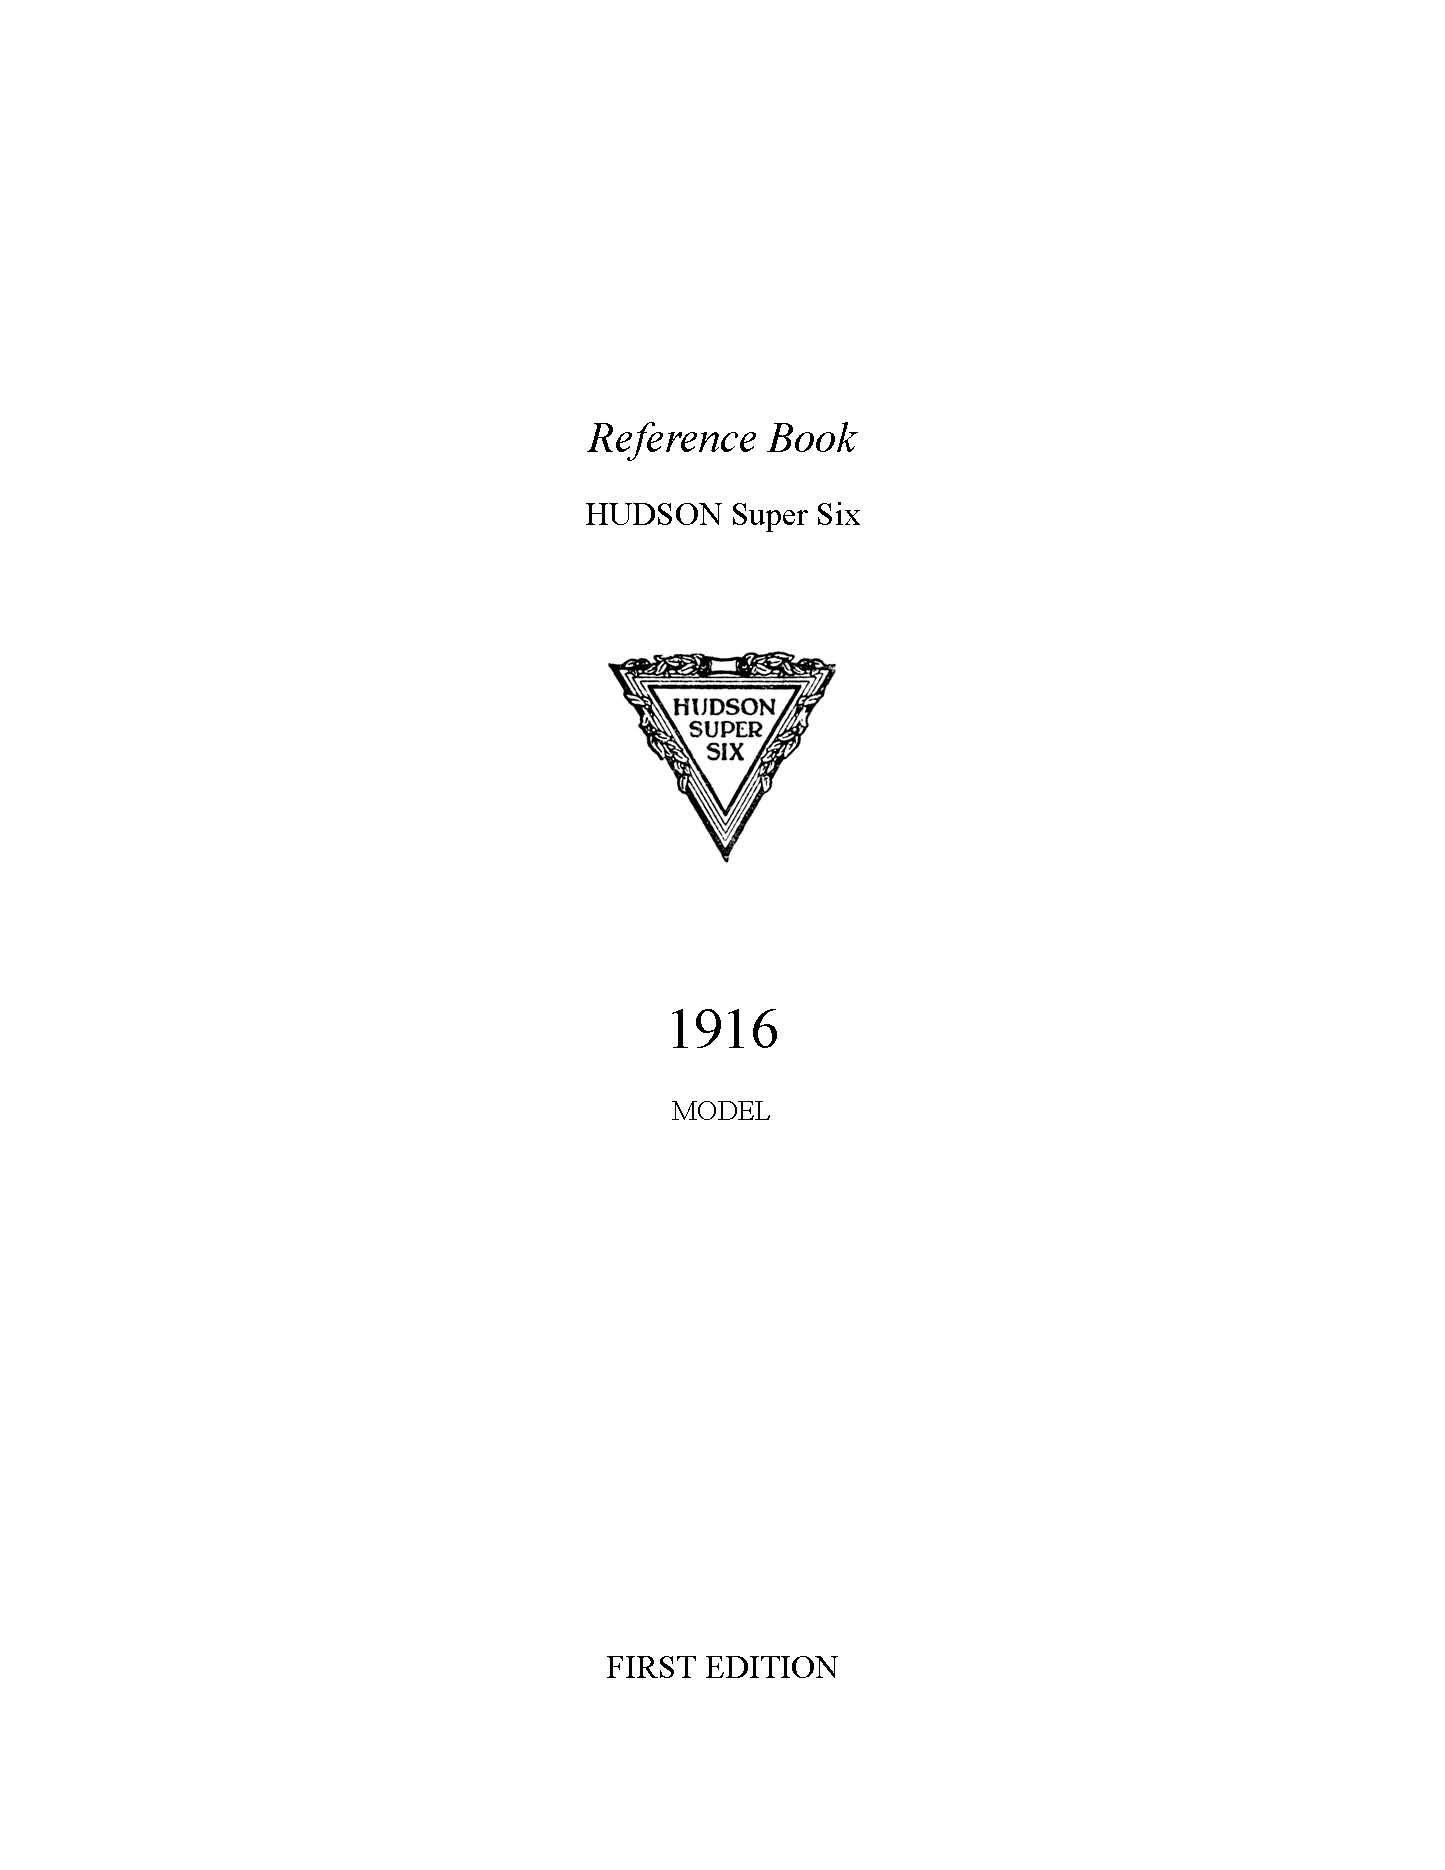 1916 Hudson Super-Six Reference Book-01